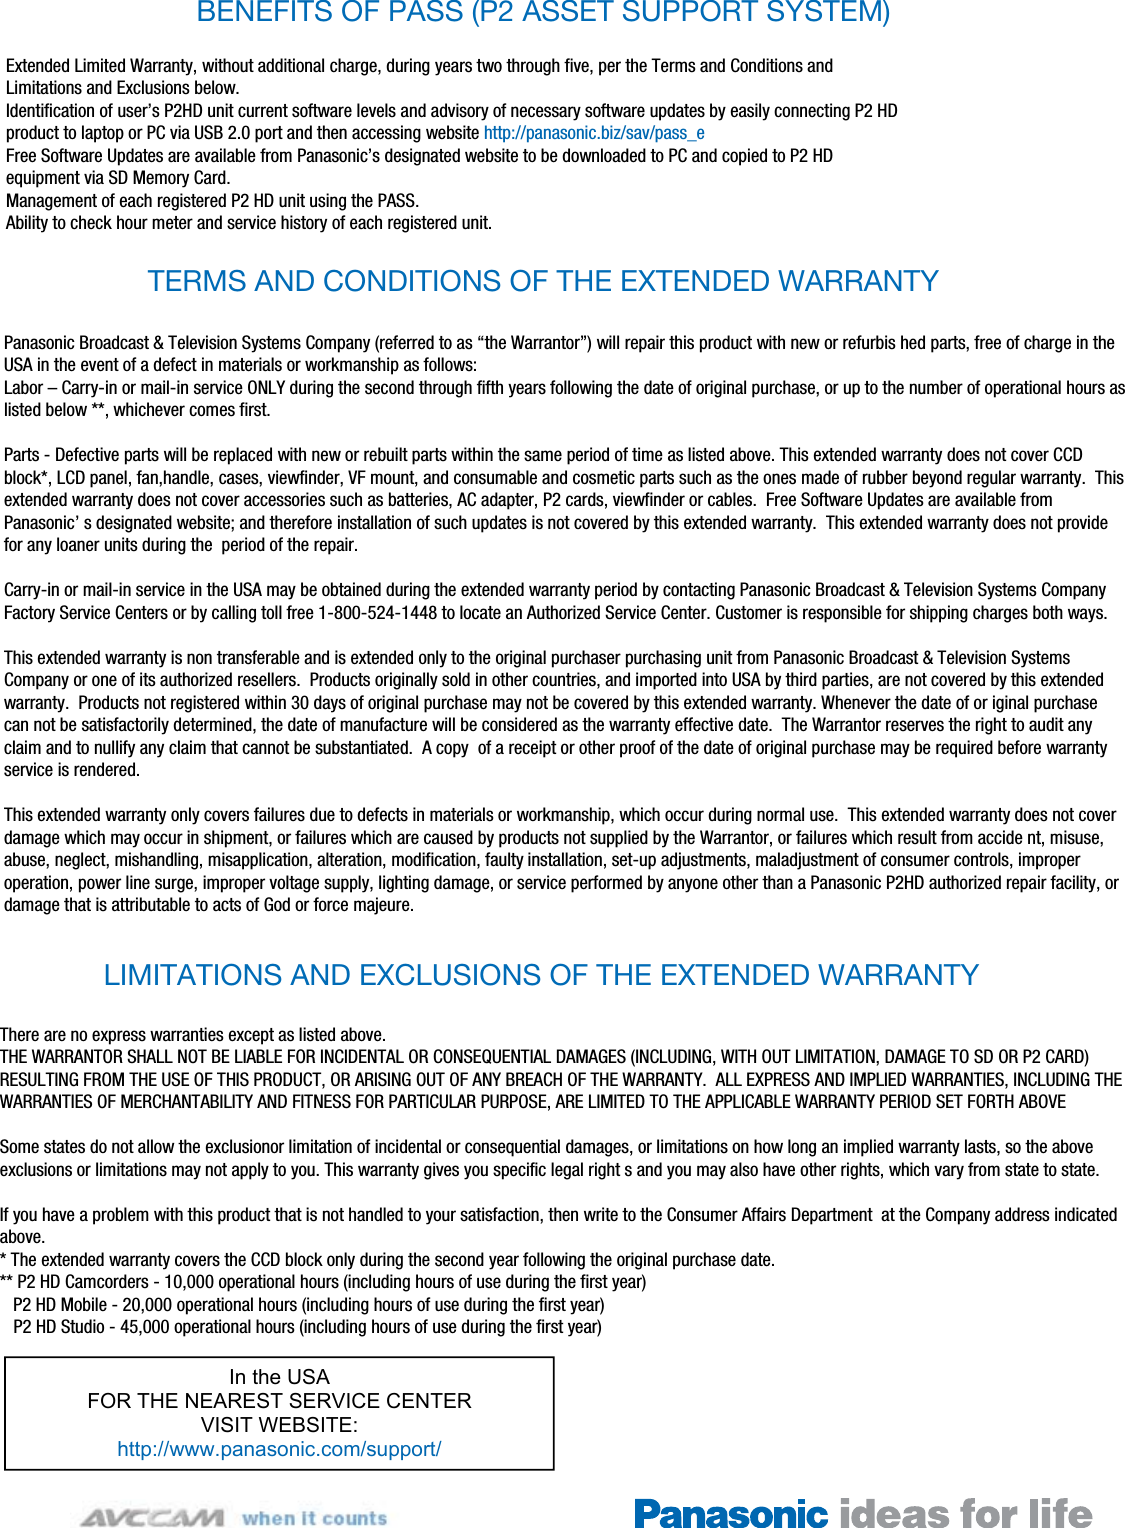 Page 2 of 2 - Panasonic AVCCAM 5 Year Warranty Program If Not Then  WT PBTS P2HD